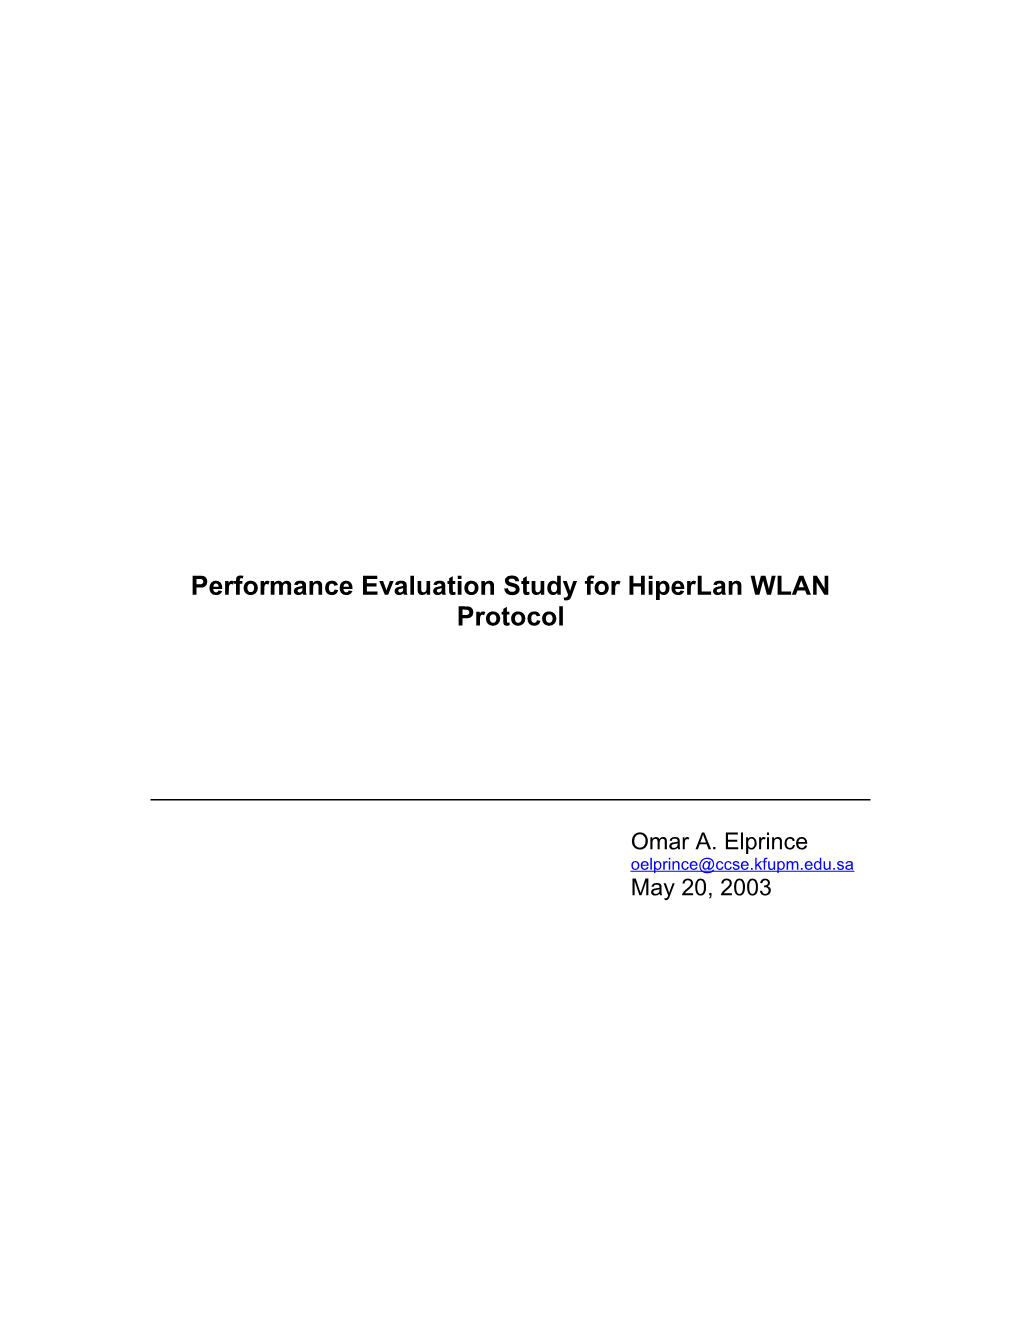 Performance Evaluation Study for Hiperlan WLAN Protocol